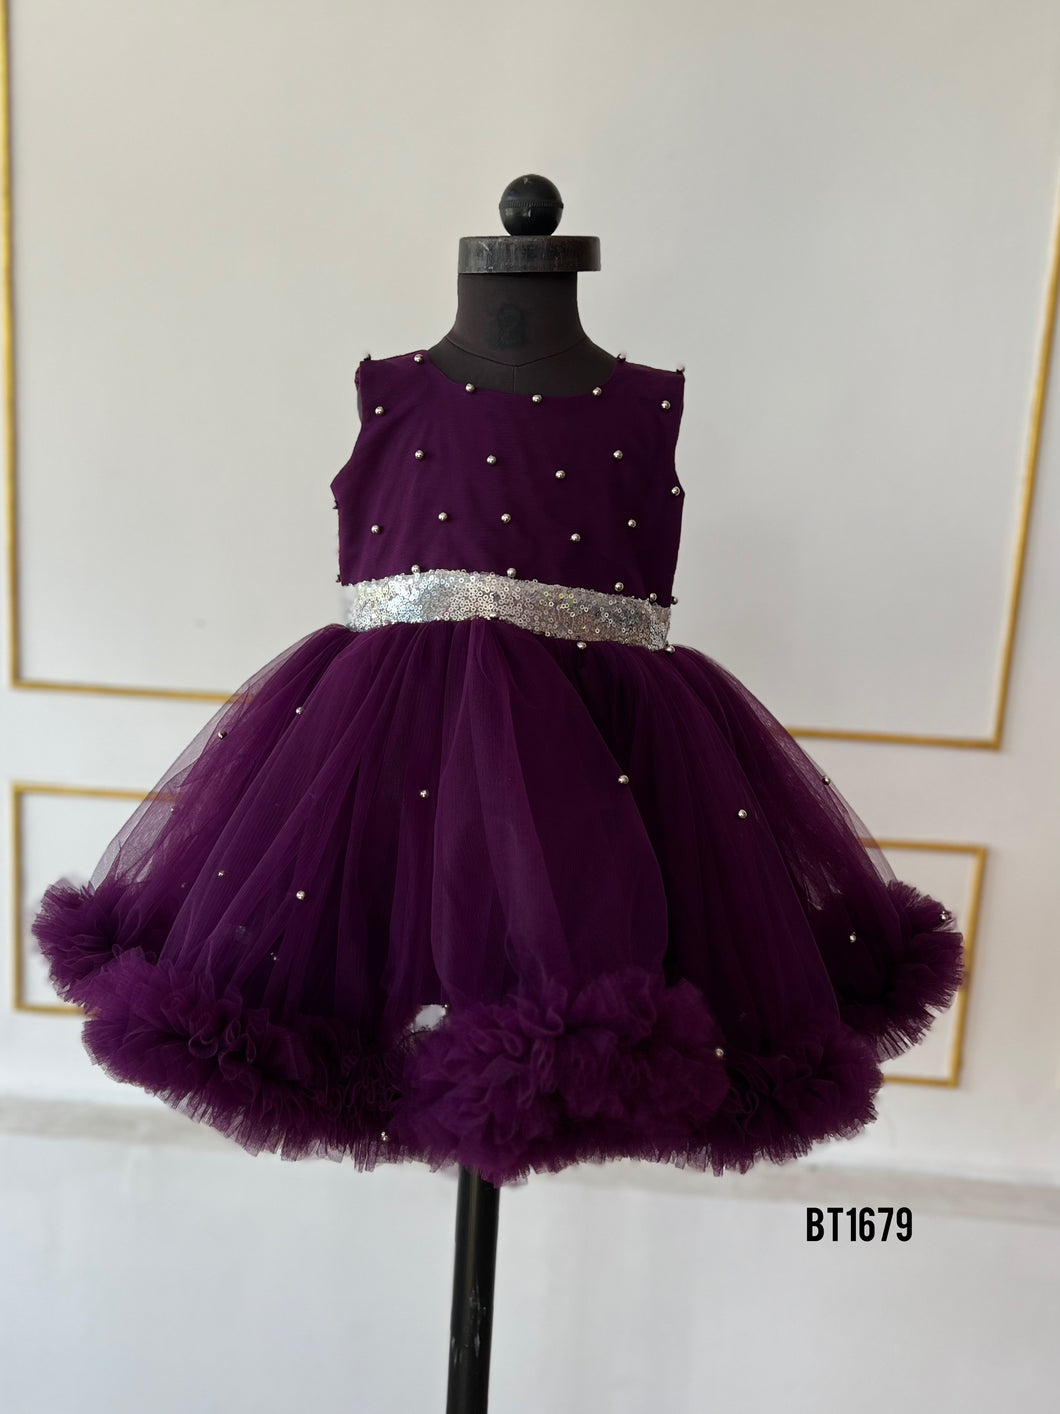 BT1679 Enchanted Amethyst: A Sparkling Purple Party Dress for Your Little Gem